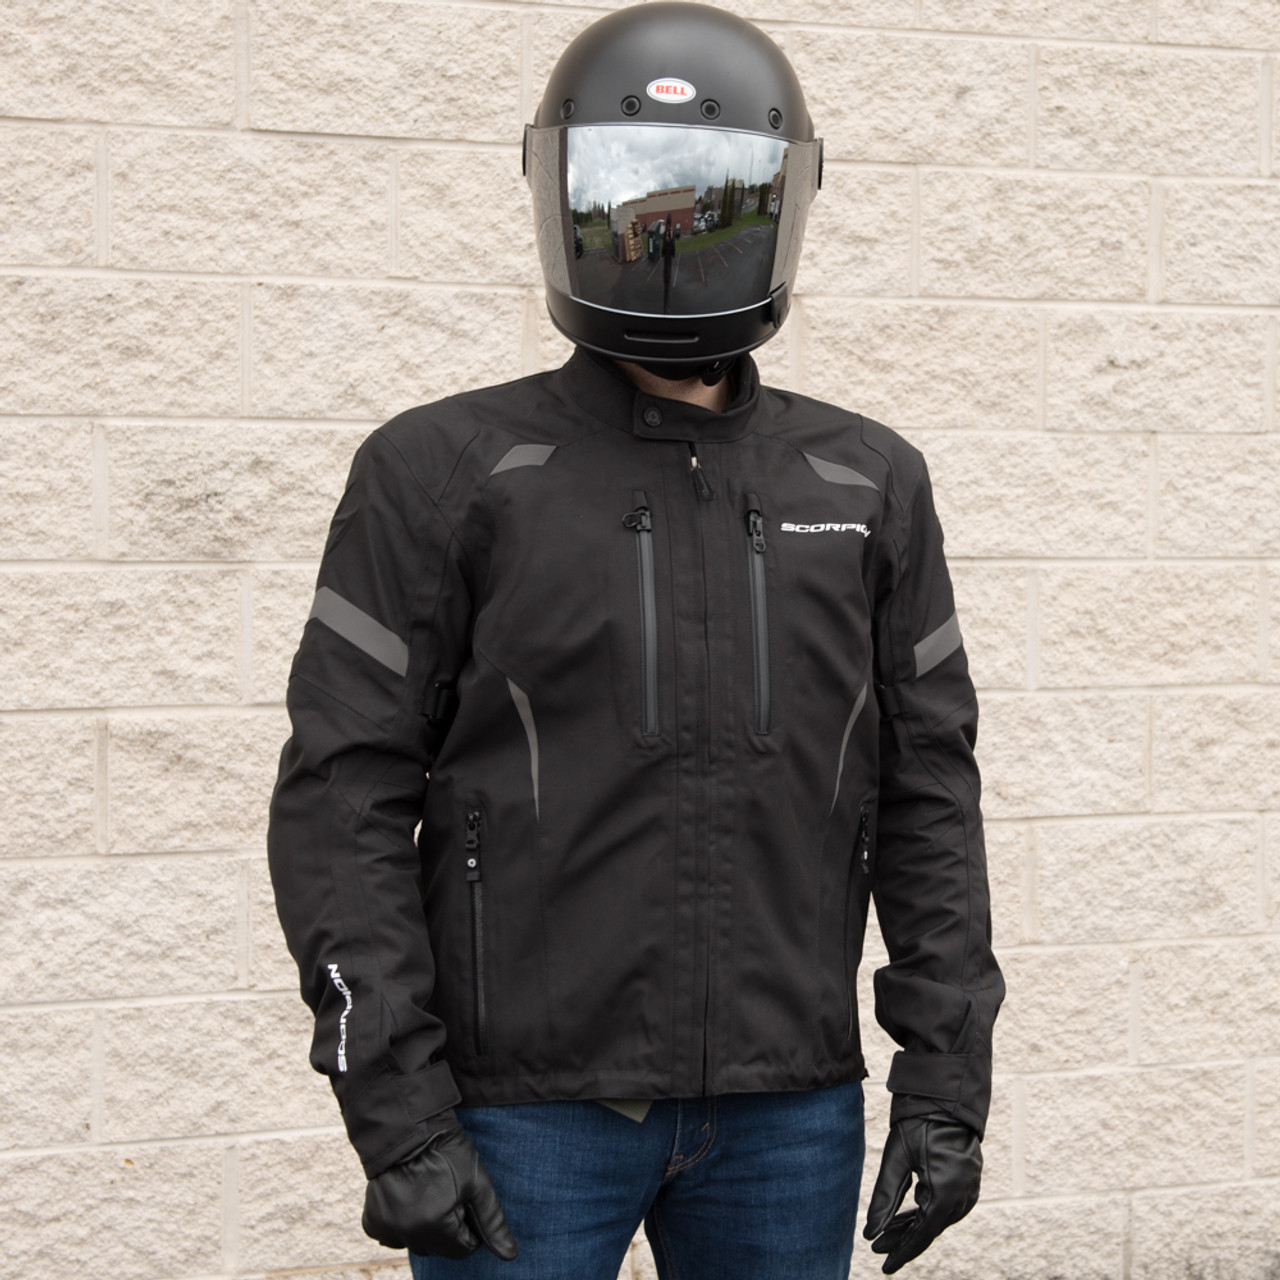 Scorpion Optima Black Motorcycle Jacket - Get Lowered Cycles